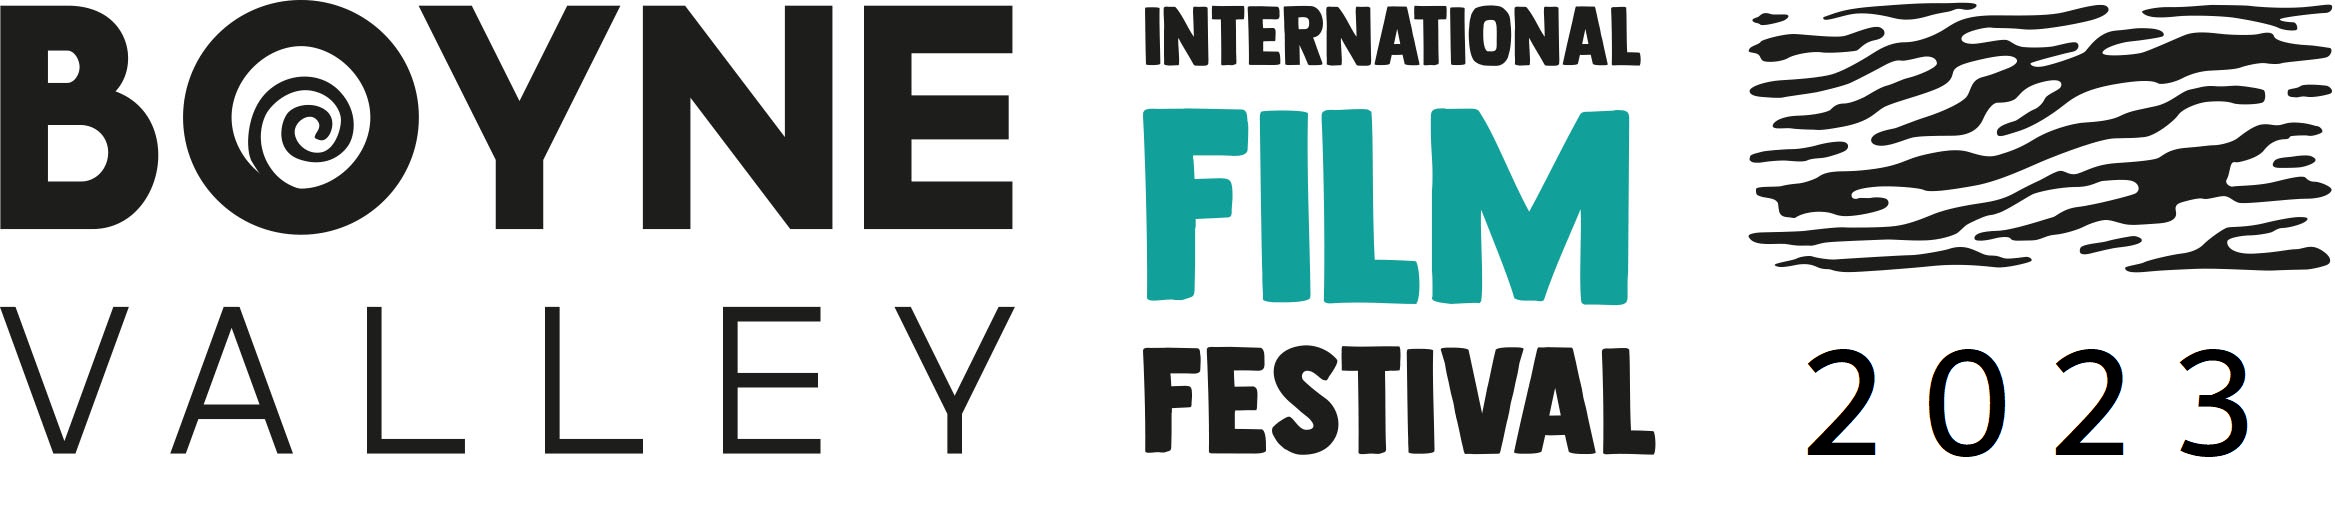 Boyne Valley International Film Festival 2023